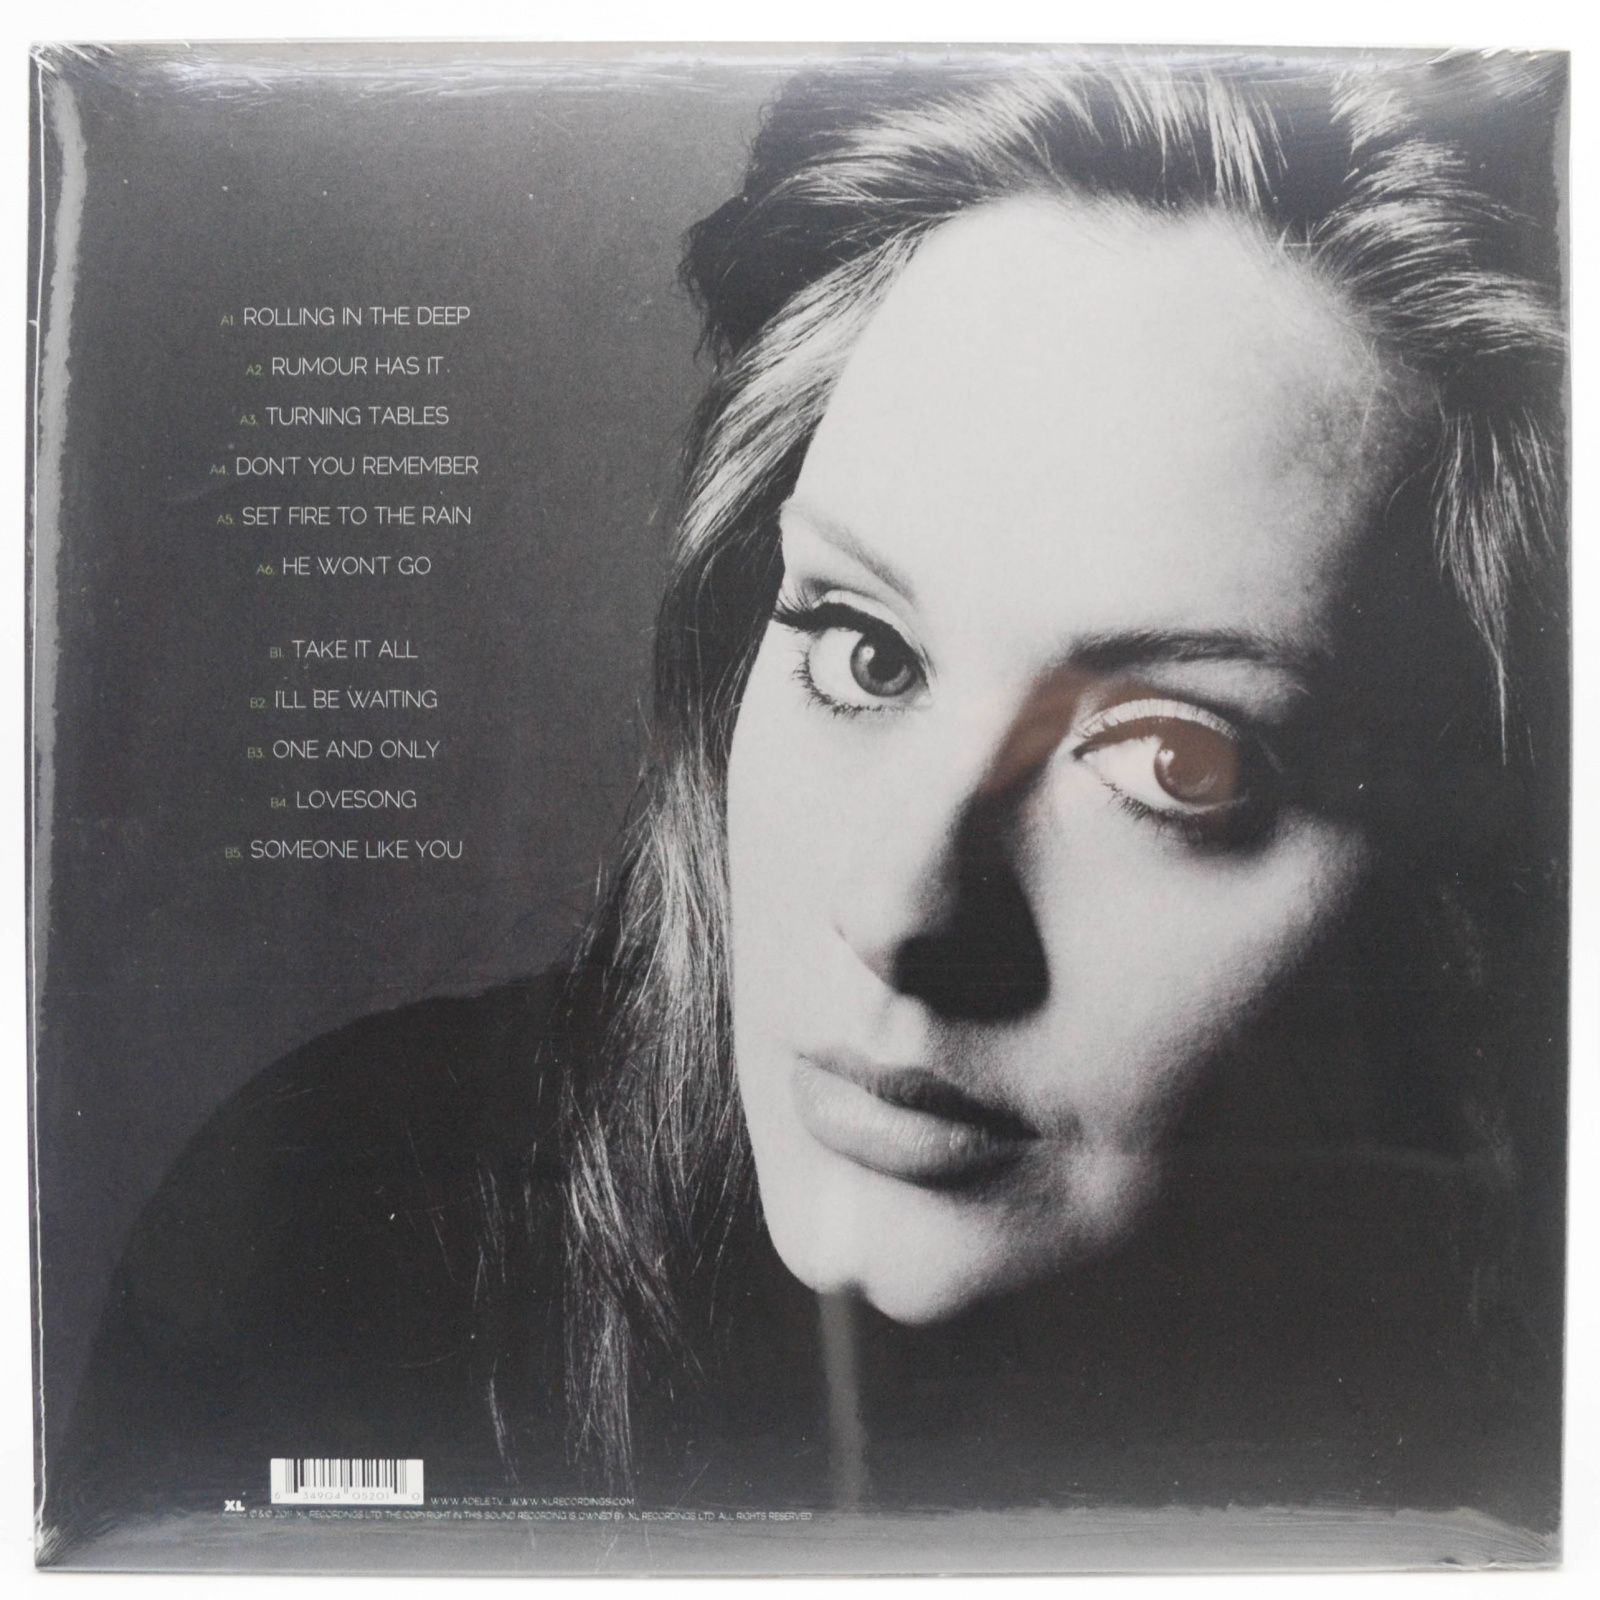 Adele — 21, 2011